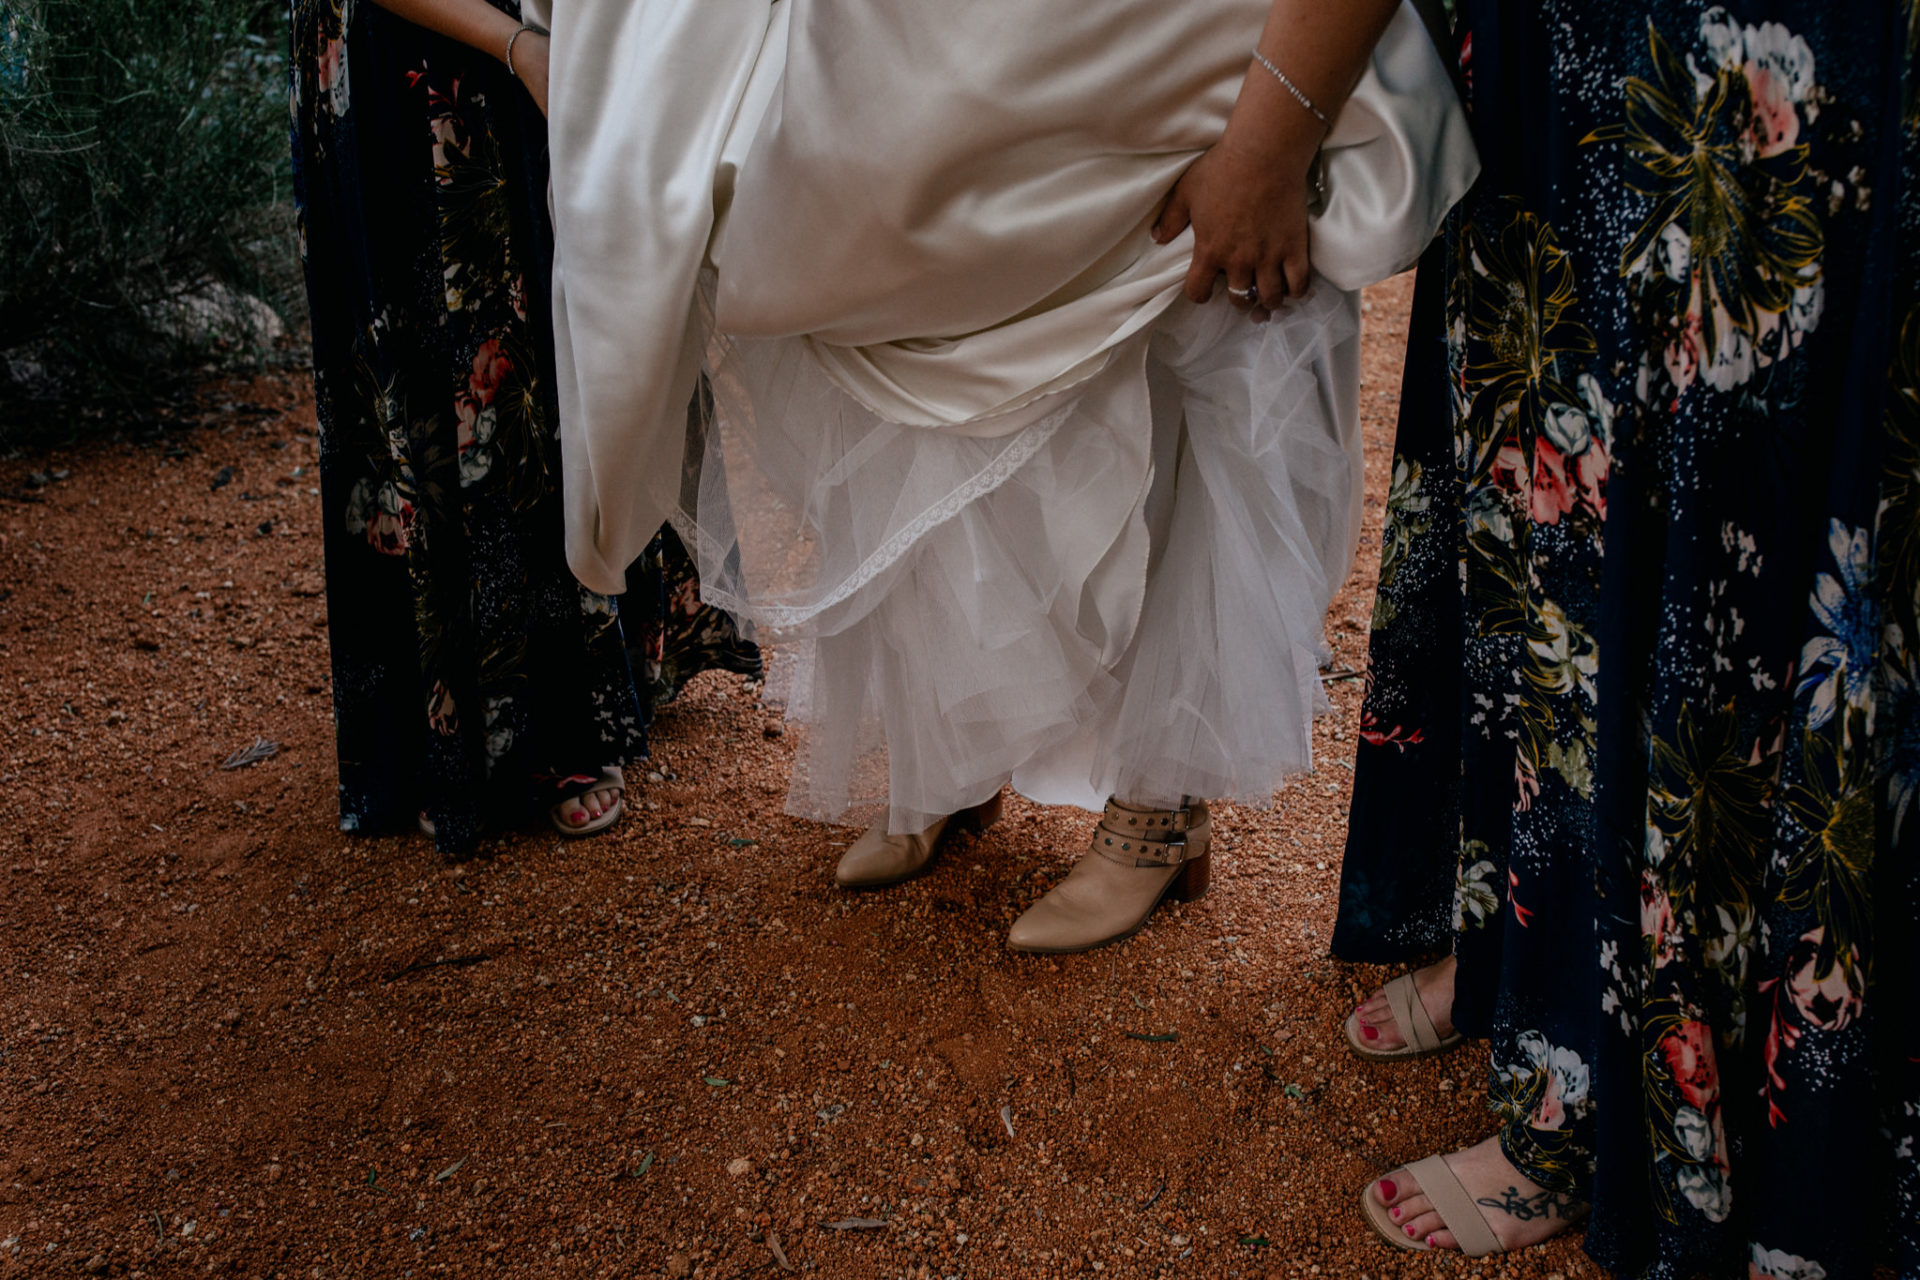 backyard-wedding-australia-melbourne-bride-bridesmaid-shoe-detail-boots